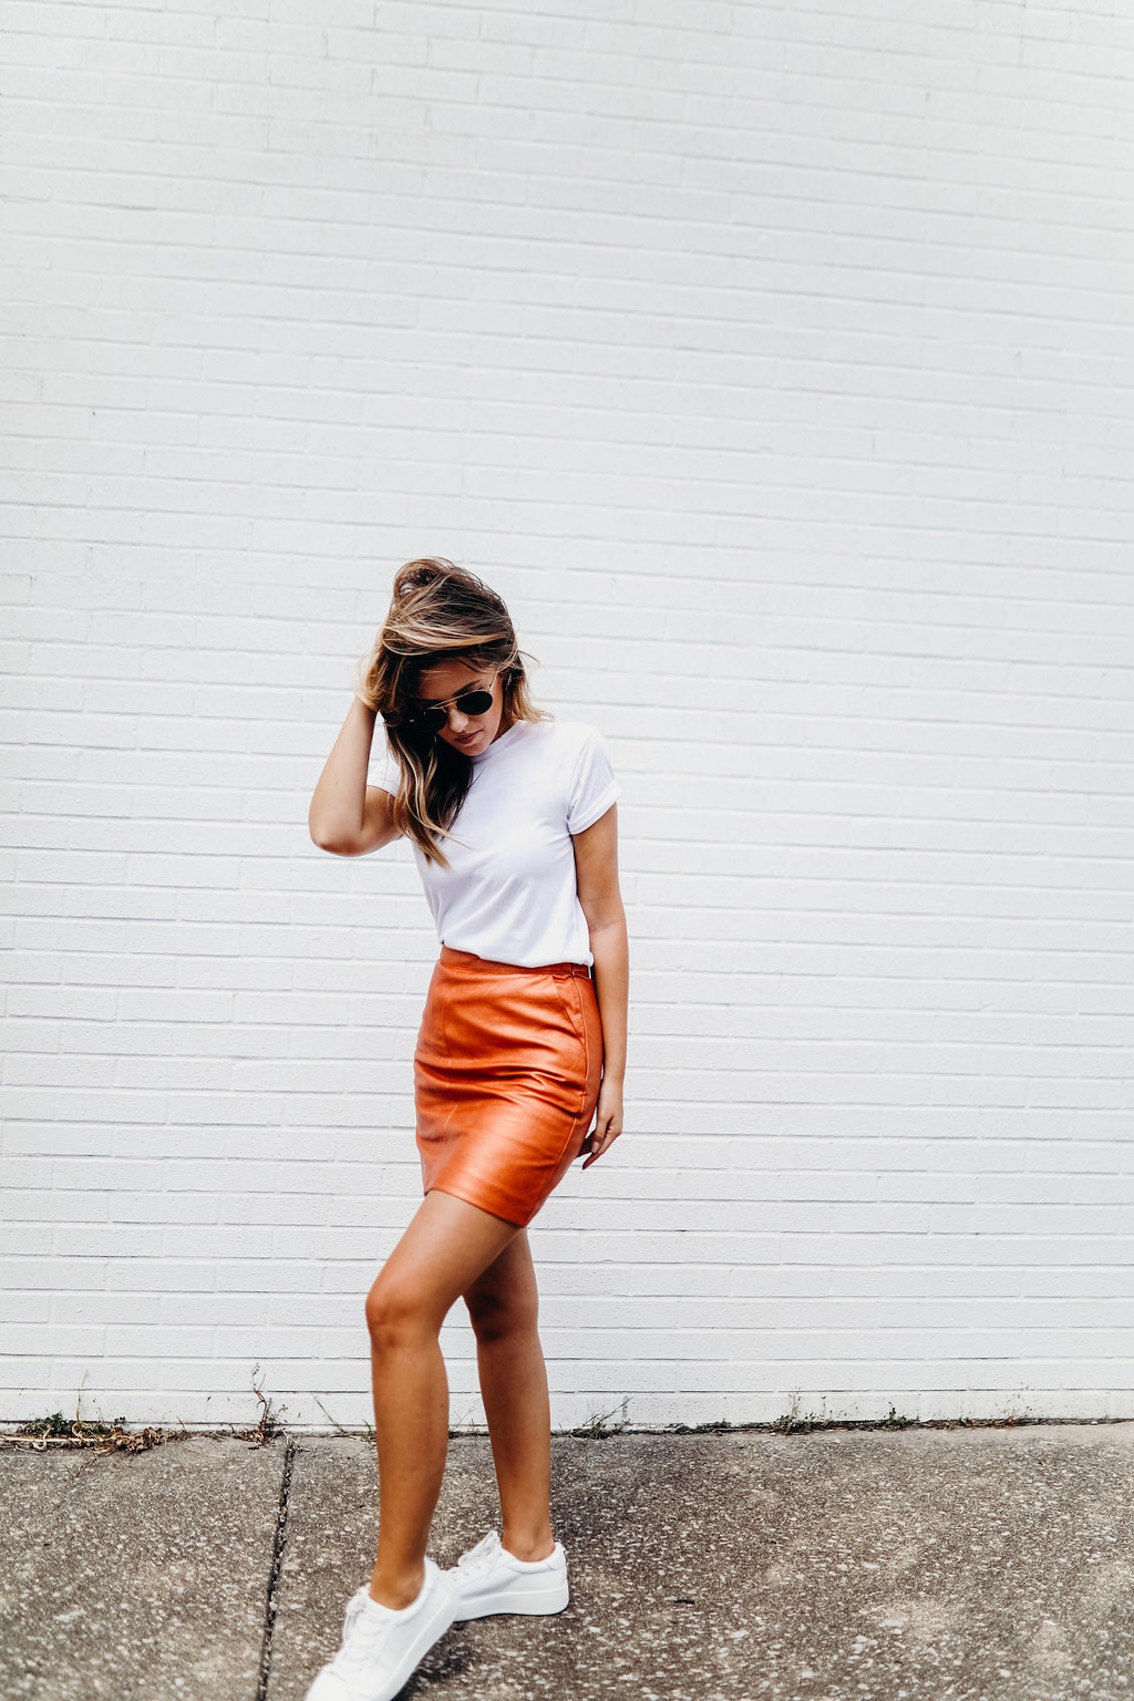 Pittsburgh Life & Personal Style Blogger | Jenna Boron of Balance and Chaos | Topshop Orange Metallic Skirt, White Sneakers | Fall 2017